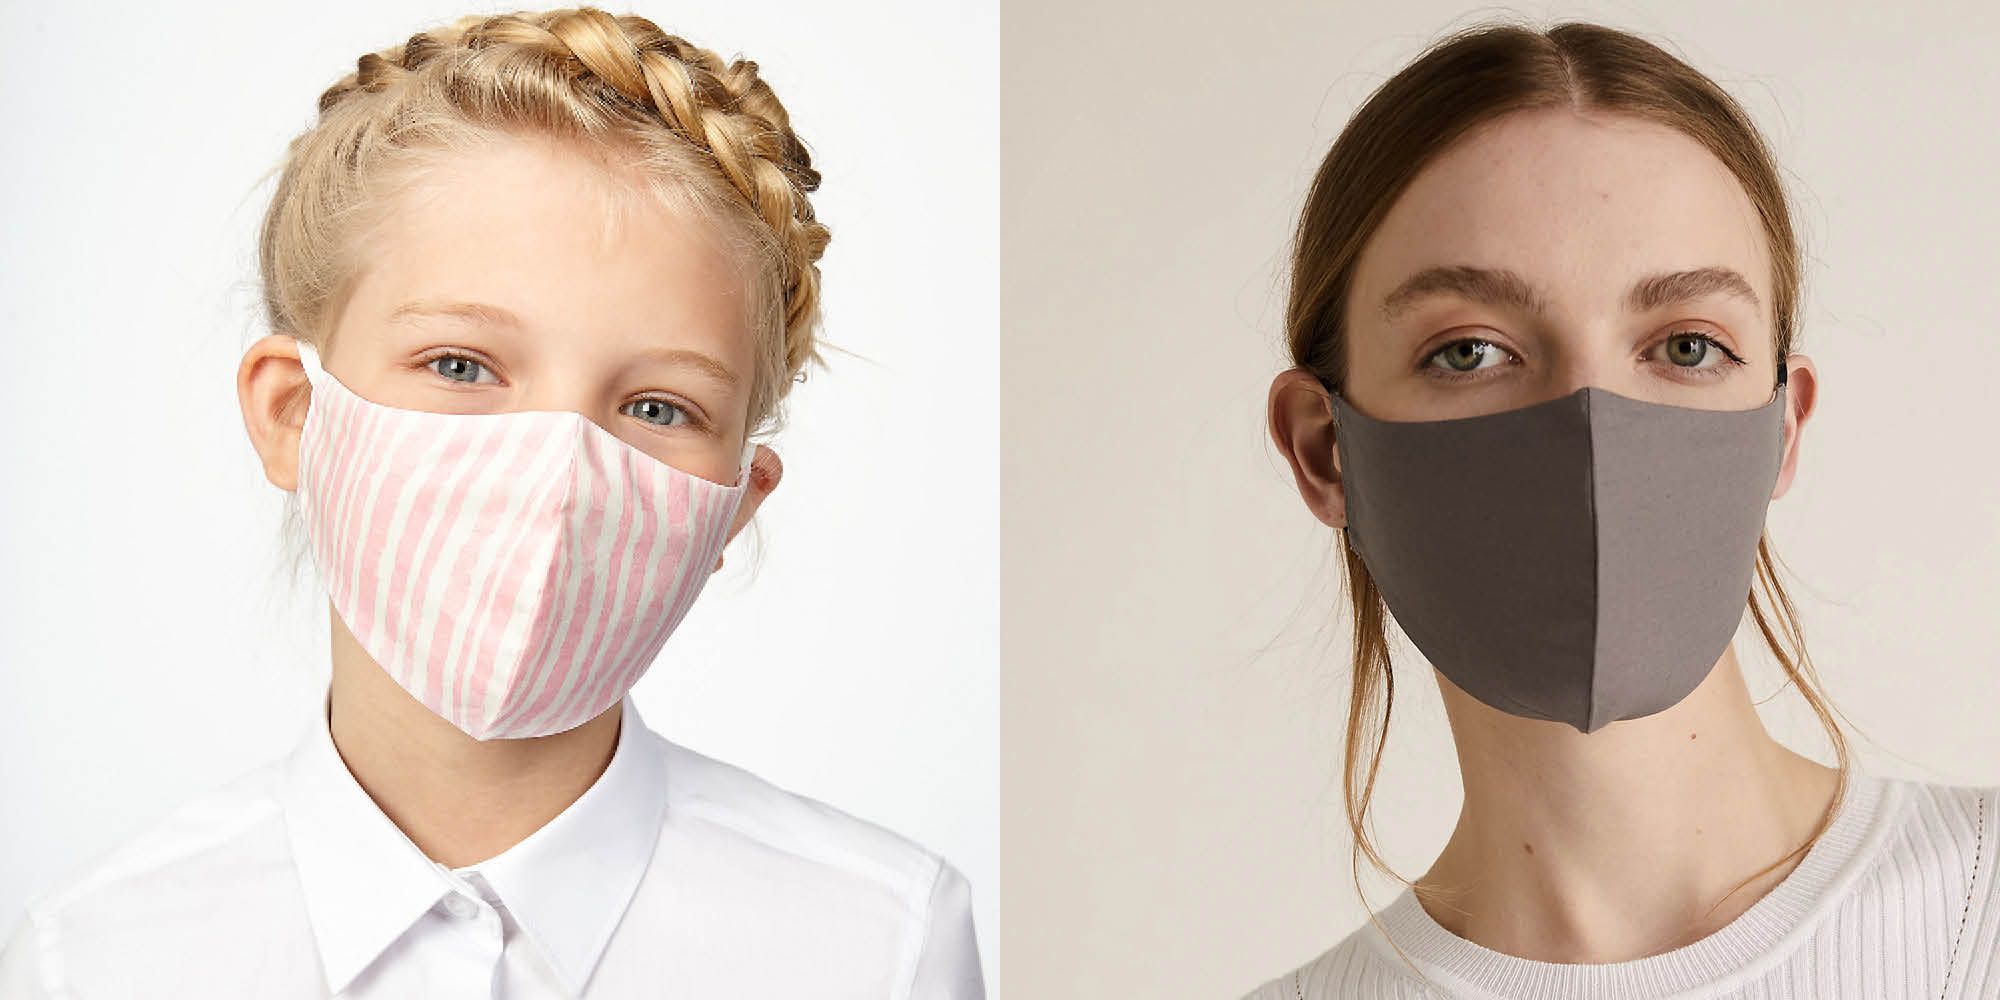 Antibacterial. Brand New M&S 5 Pack Reusable & Adjustable Kids' Face Coverings